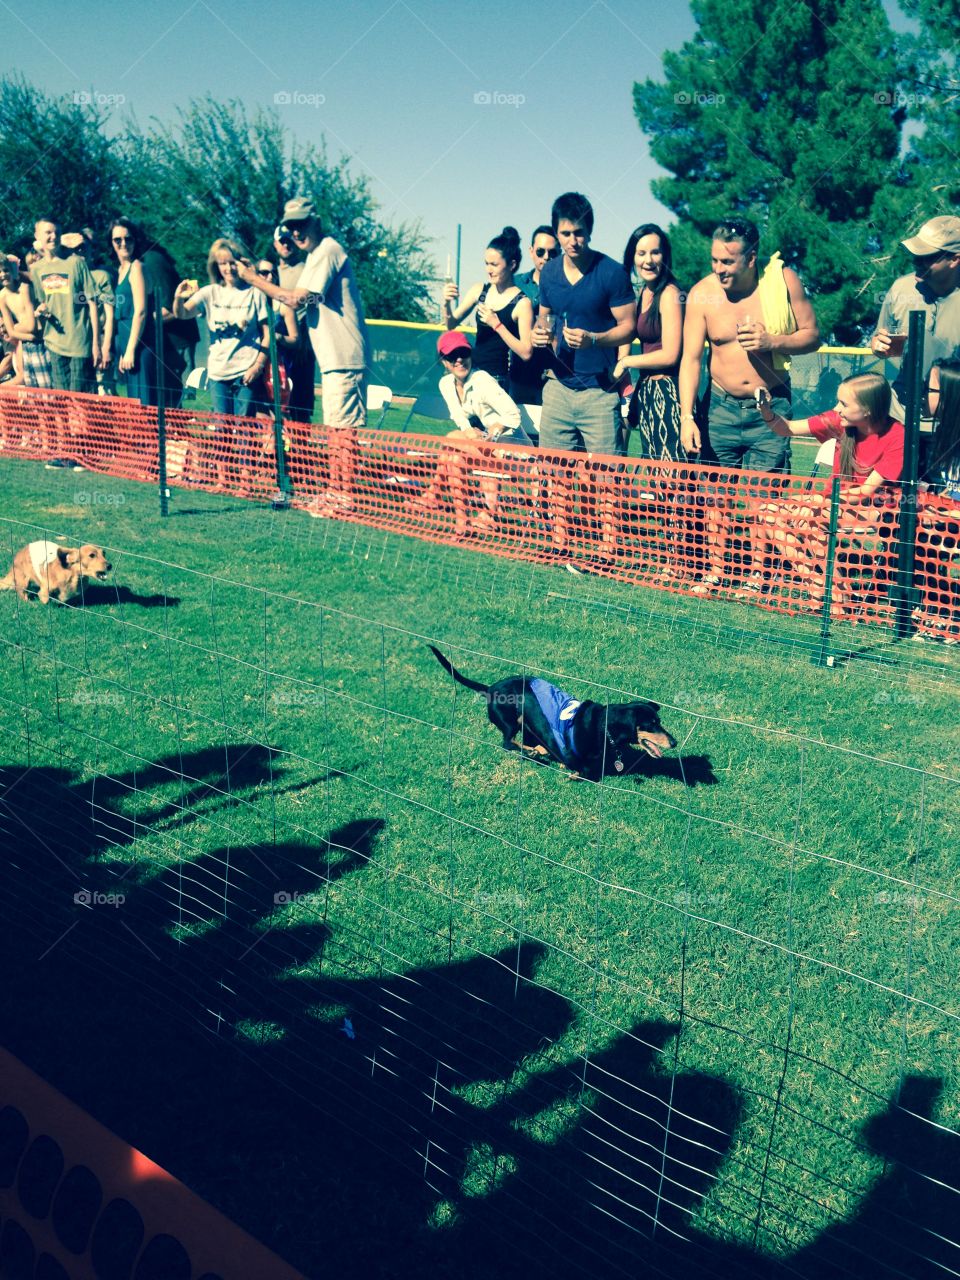 Wiener Dog Racing. Dachshund racing at Oktoberfest in Tempe, Arizona 